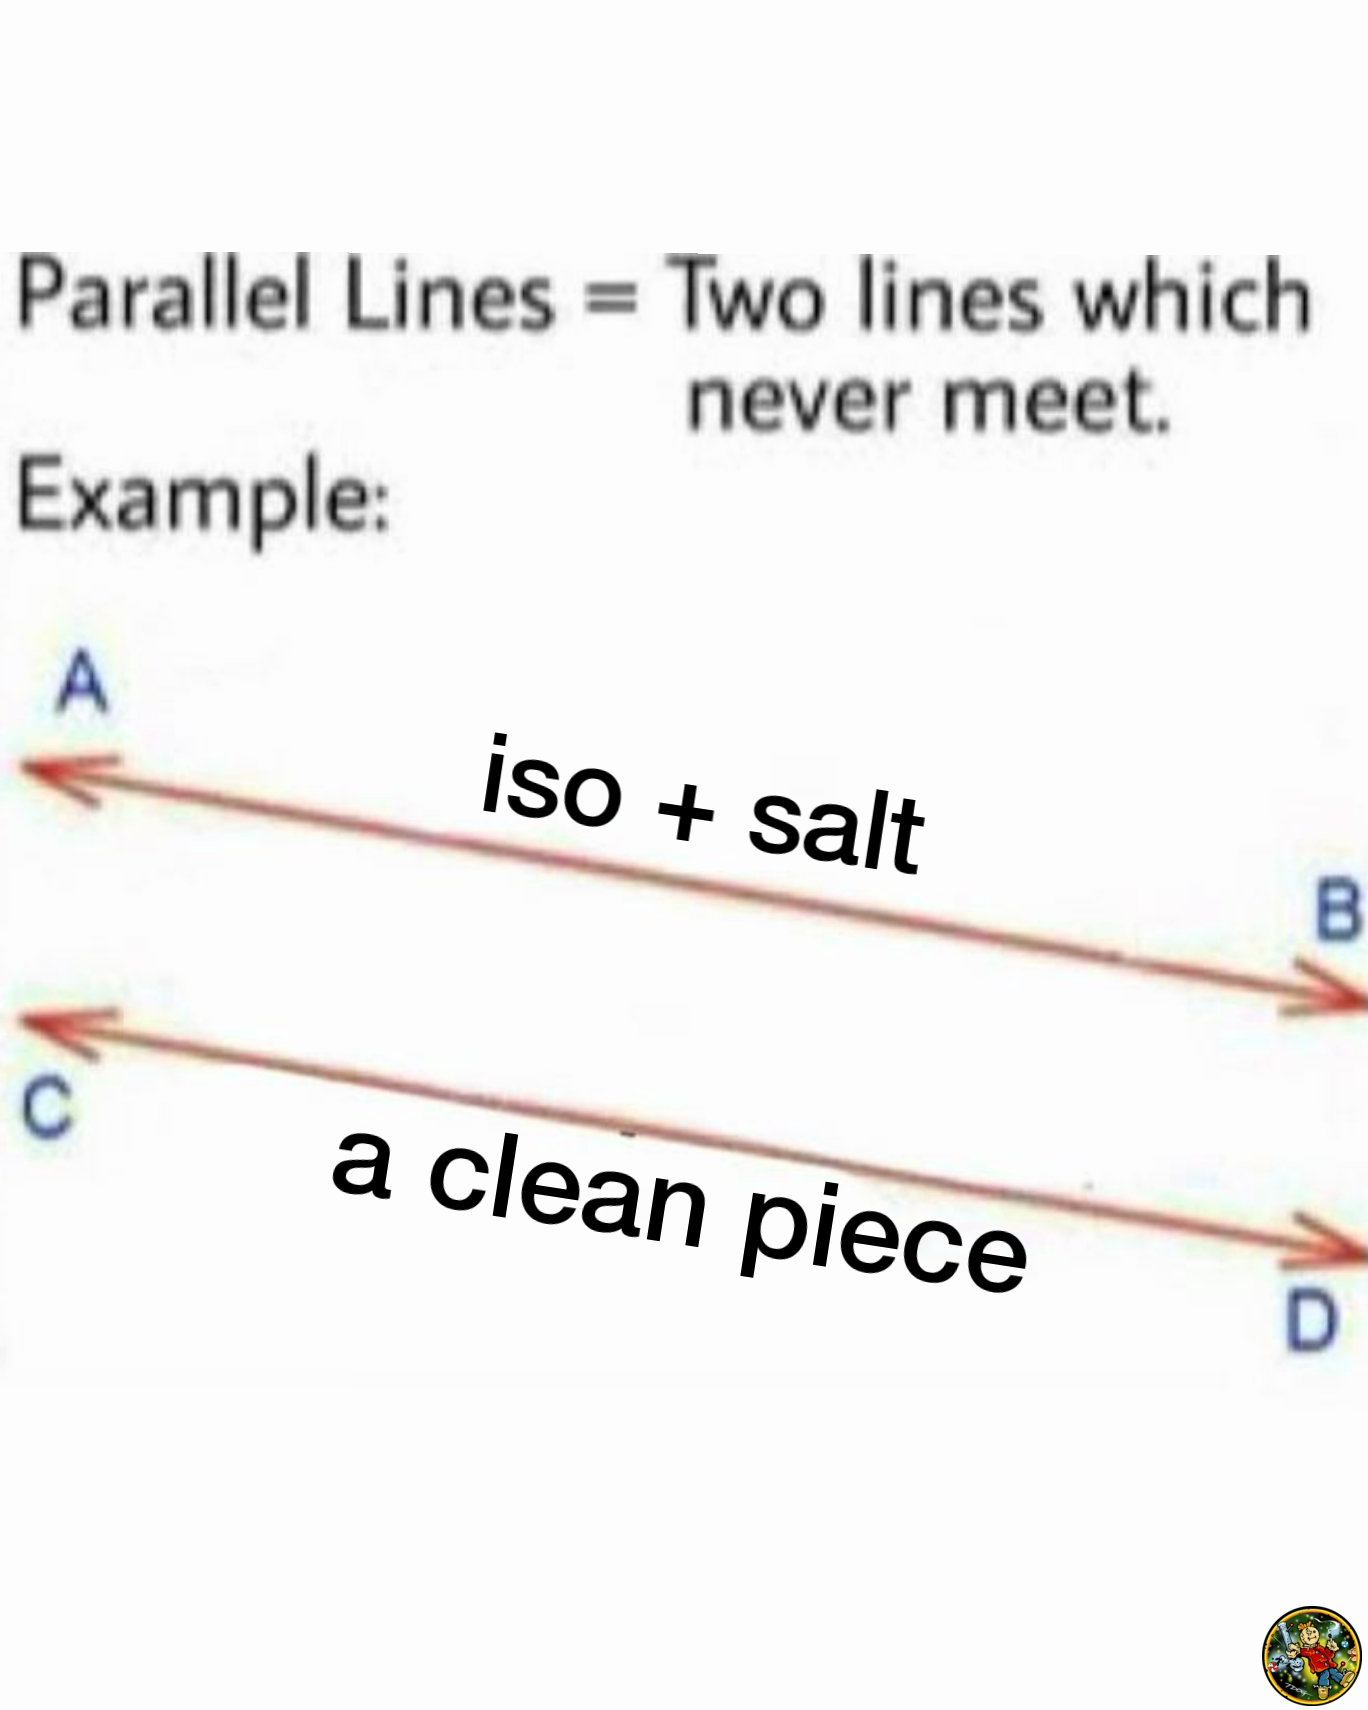 a clean piece iso + salt